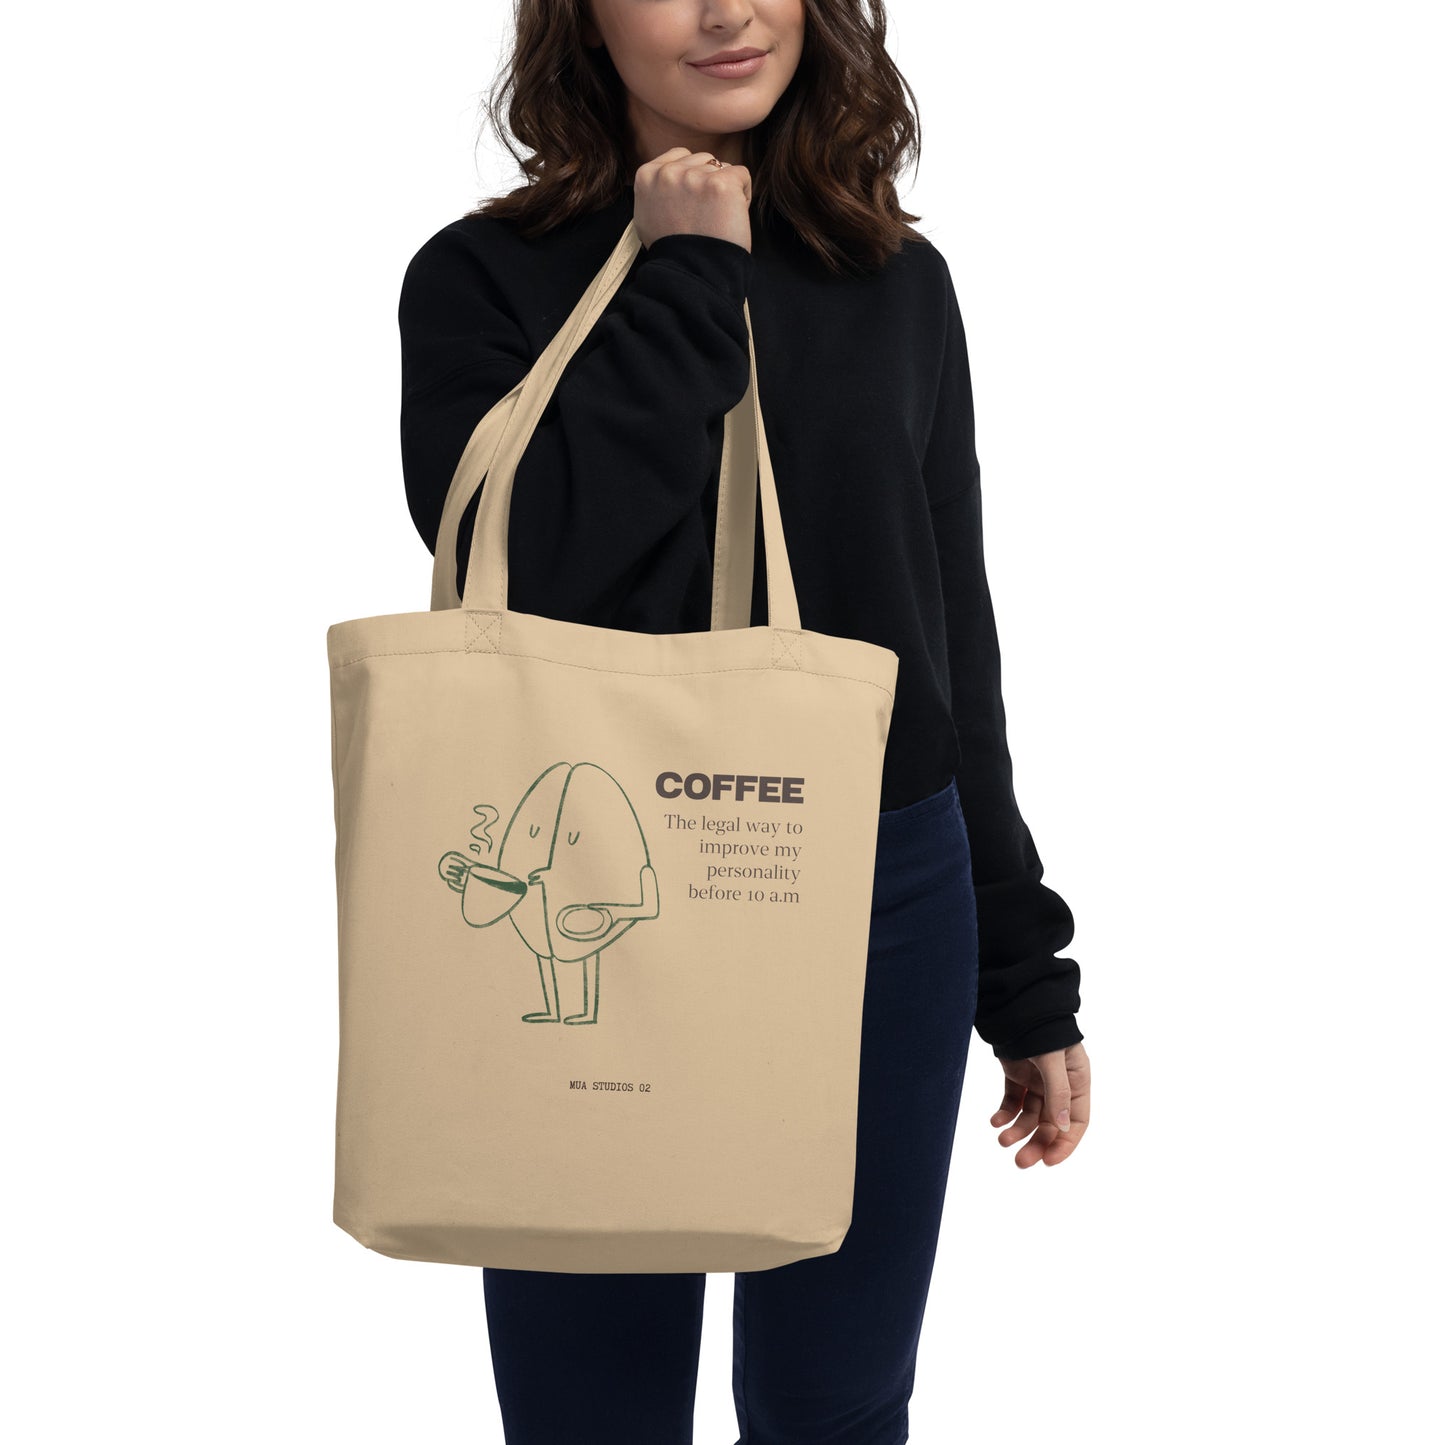 "Coffee Addict's" Tote Bag